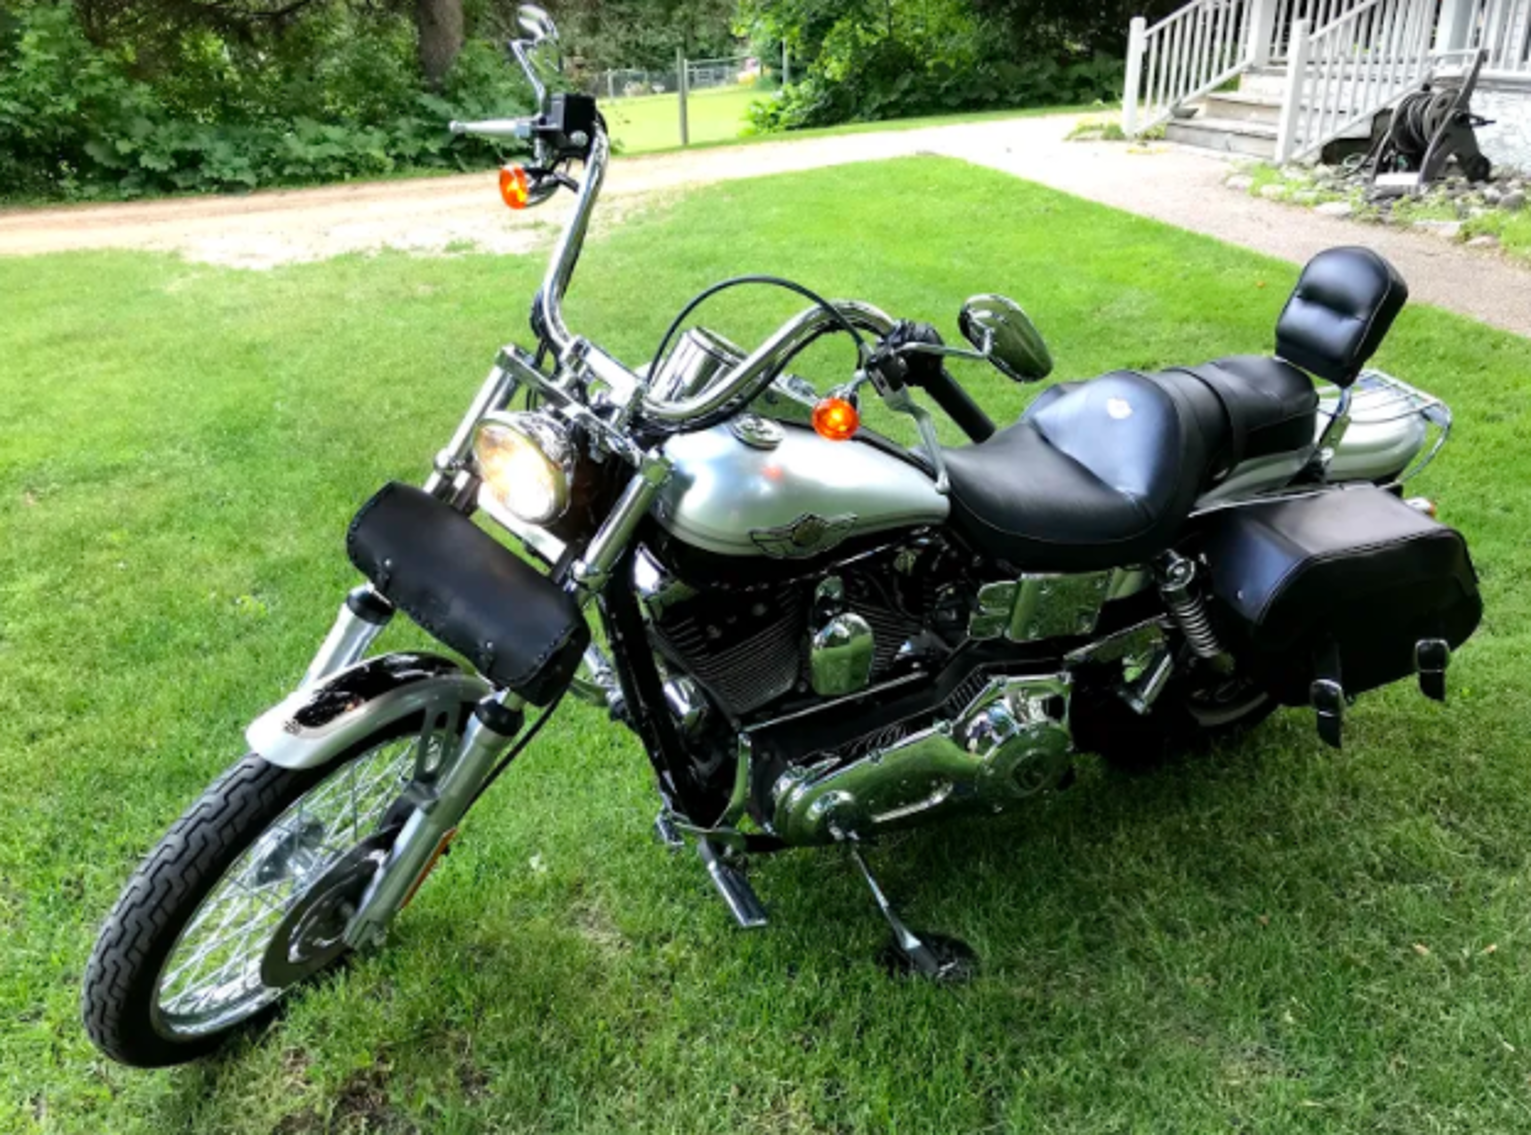 2003 Harley Davidson Dyna Wide Glide, 2014 Stealth Blackhawk Enclosed Trailer, Halloween Decor, Tools, & More